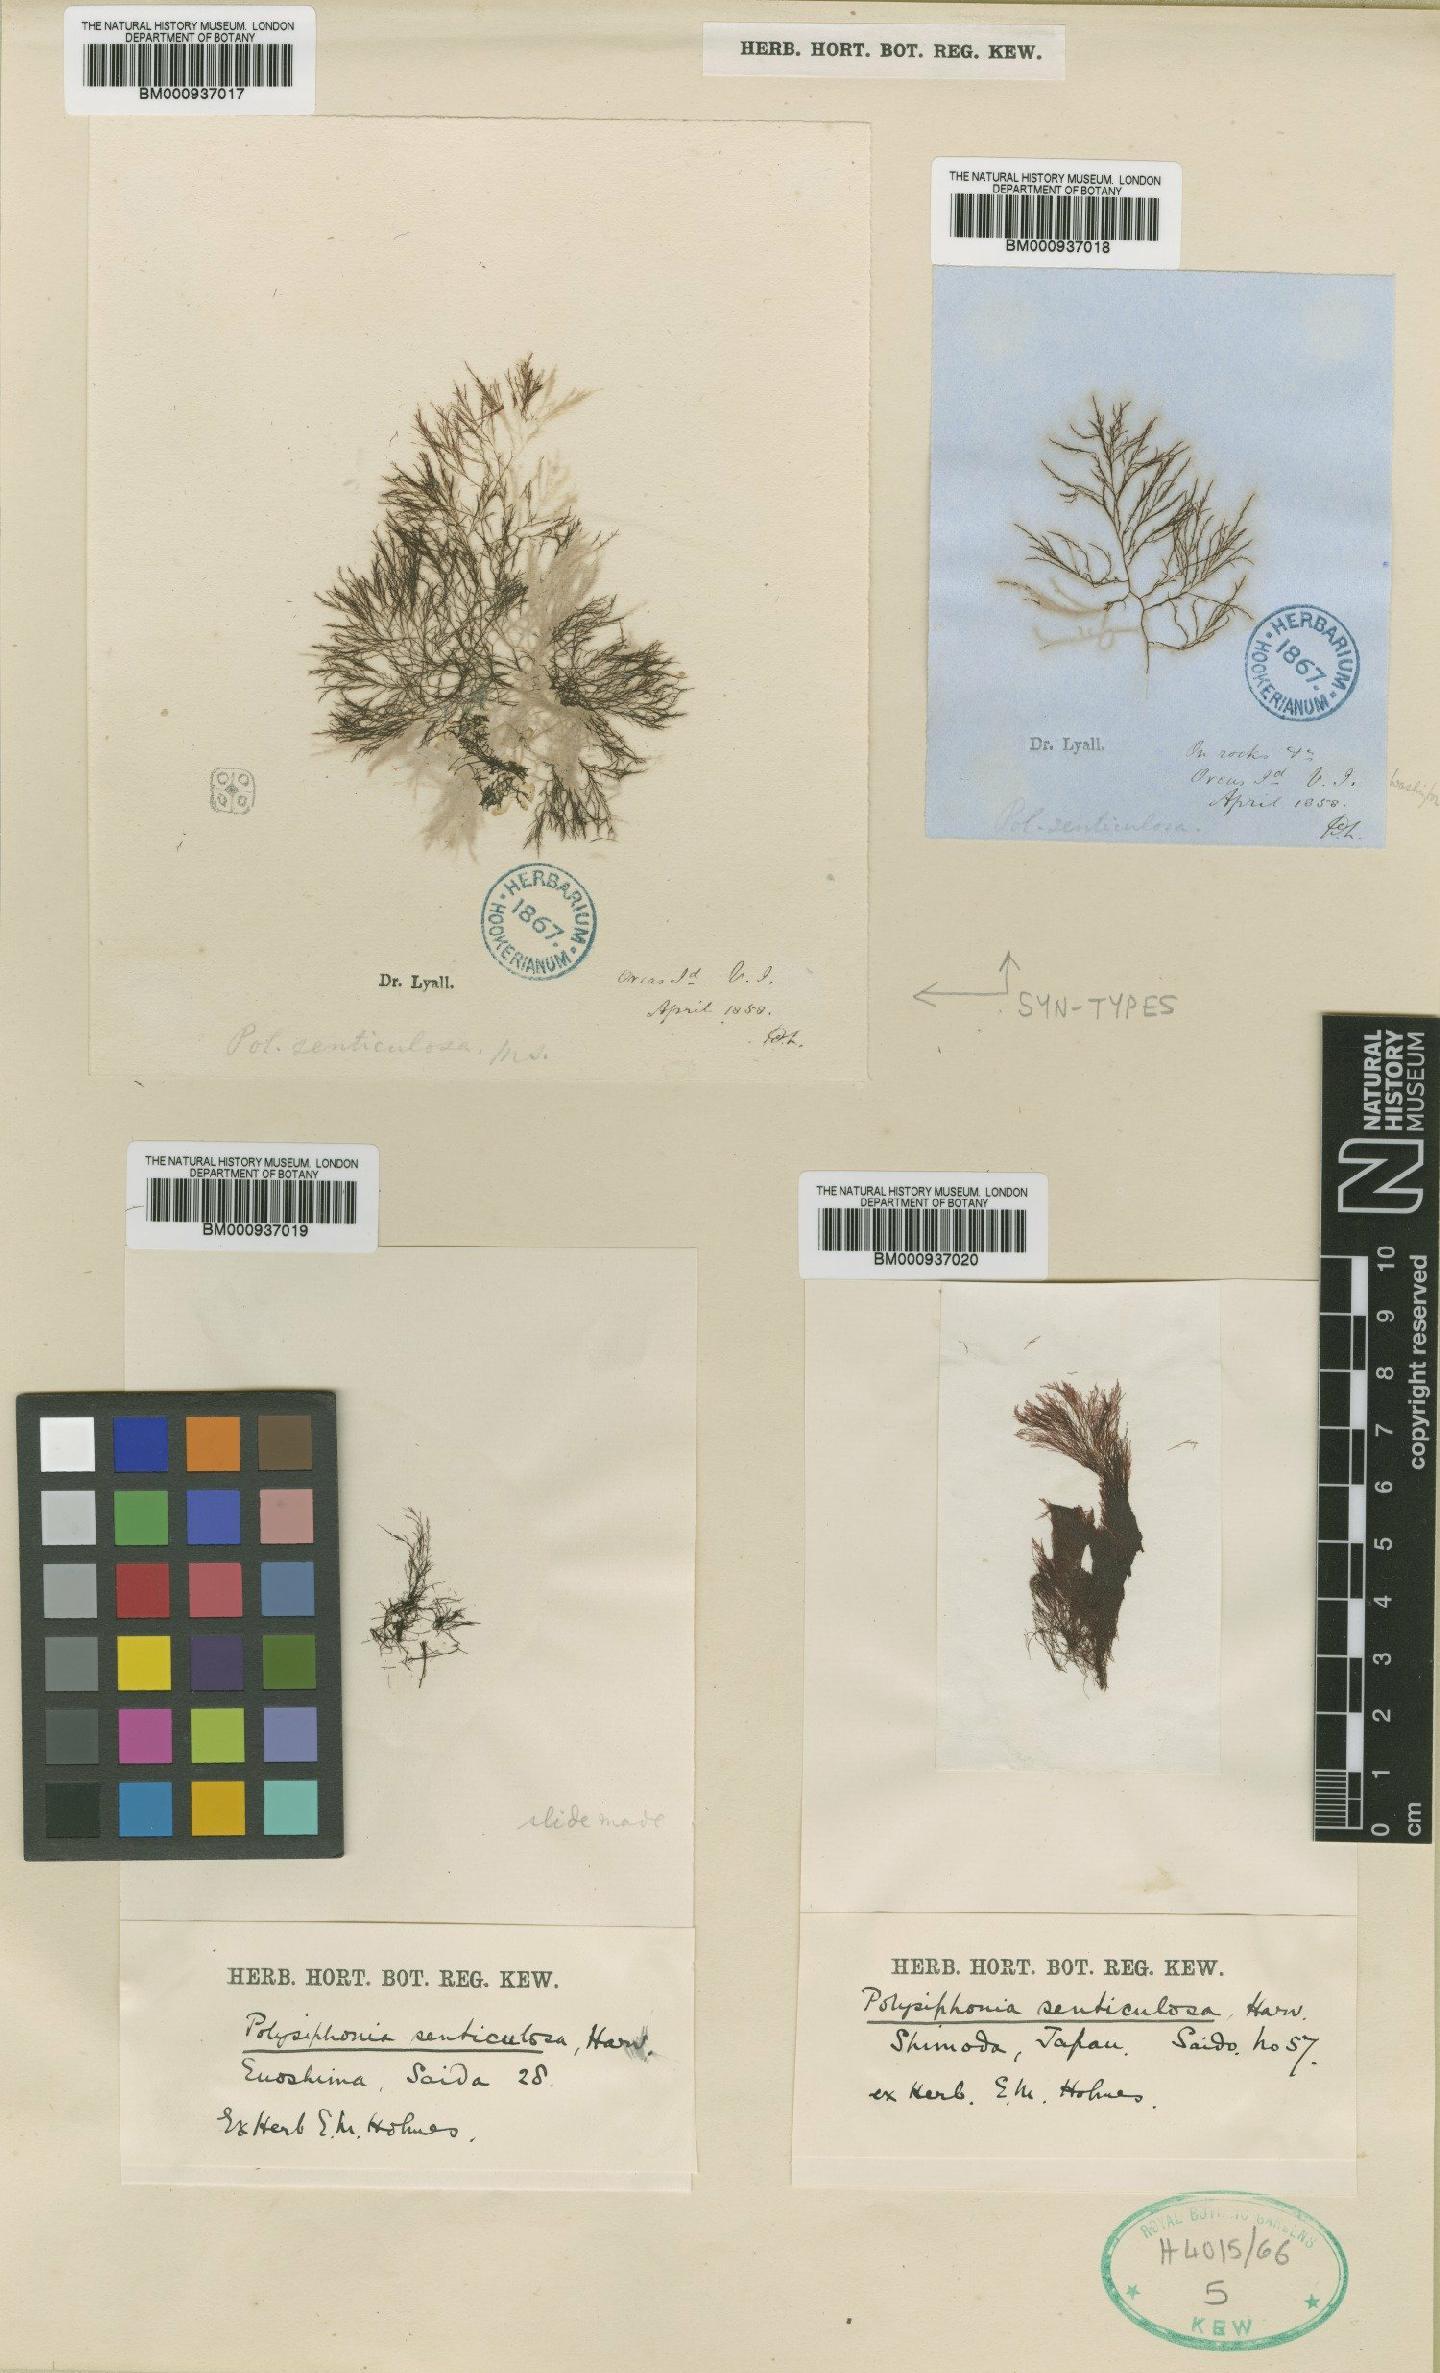 To NHMUK collection (Polysiphonia senticulosa Harv.; Syntype; NHMUK:ecatalogue:465448)